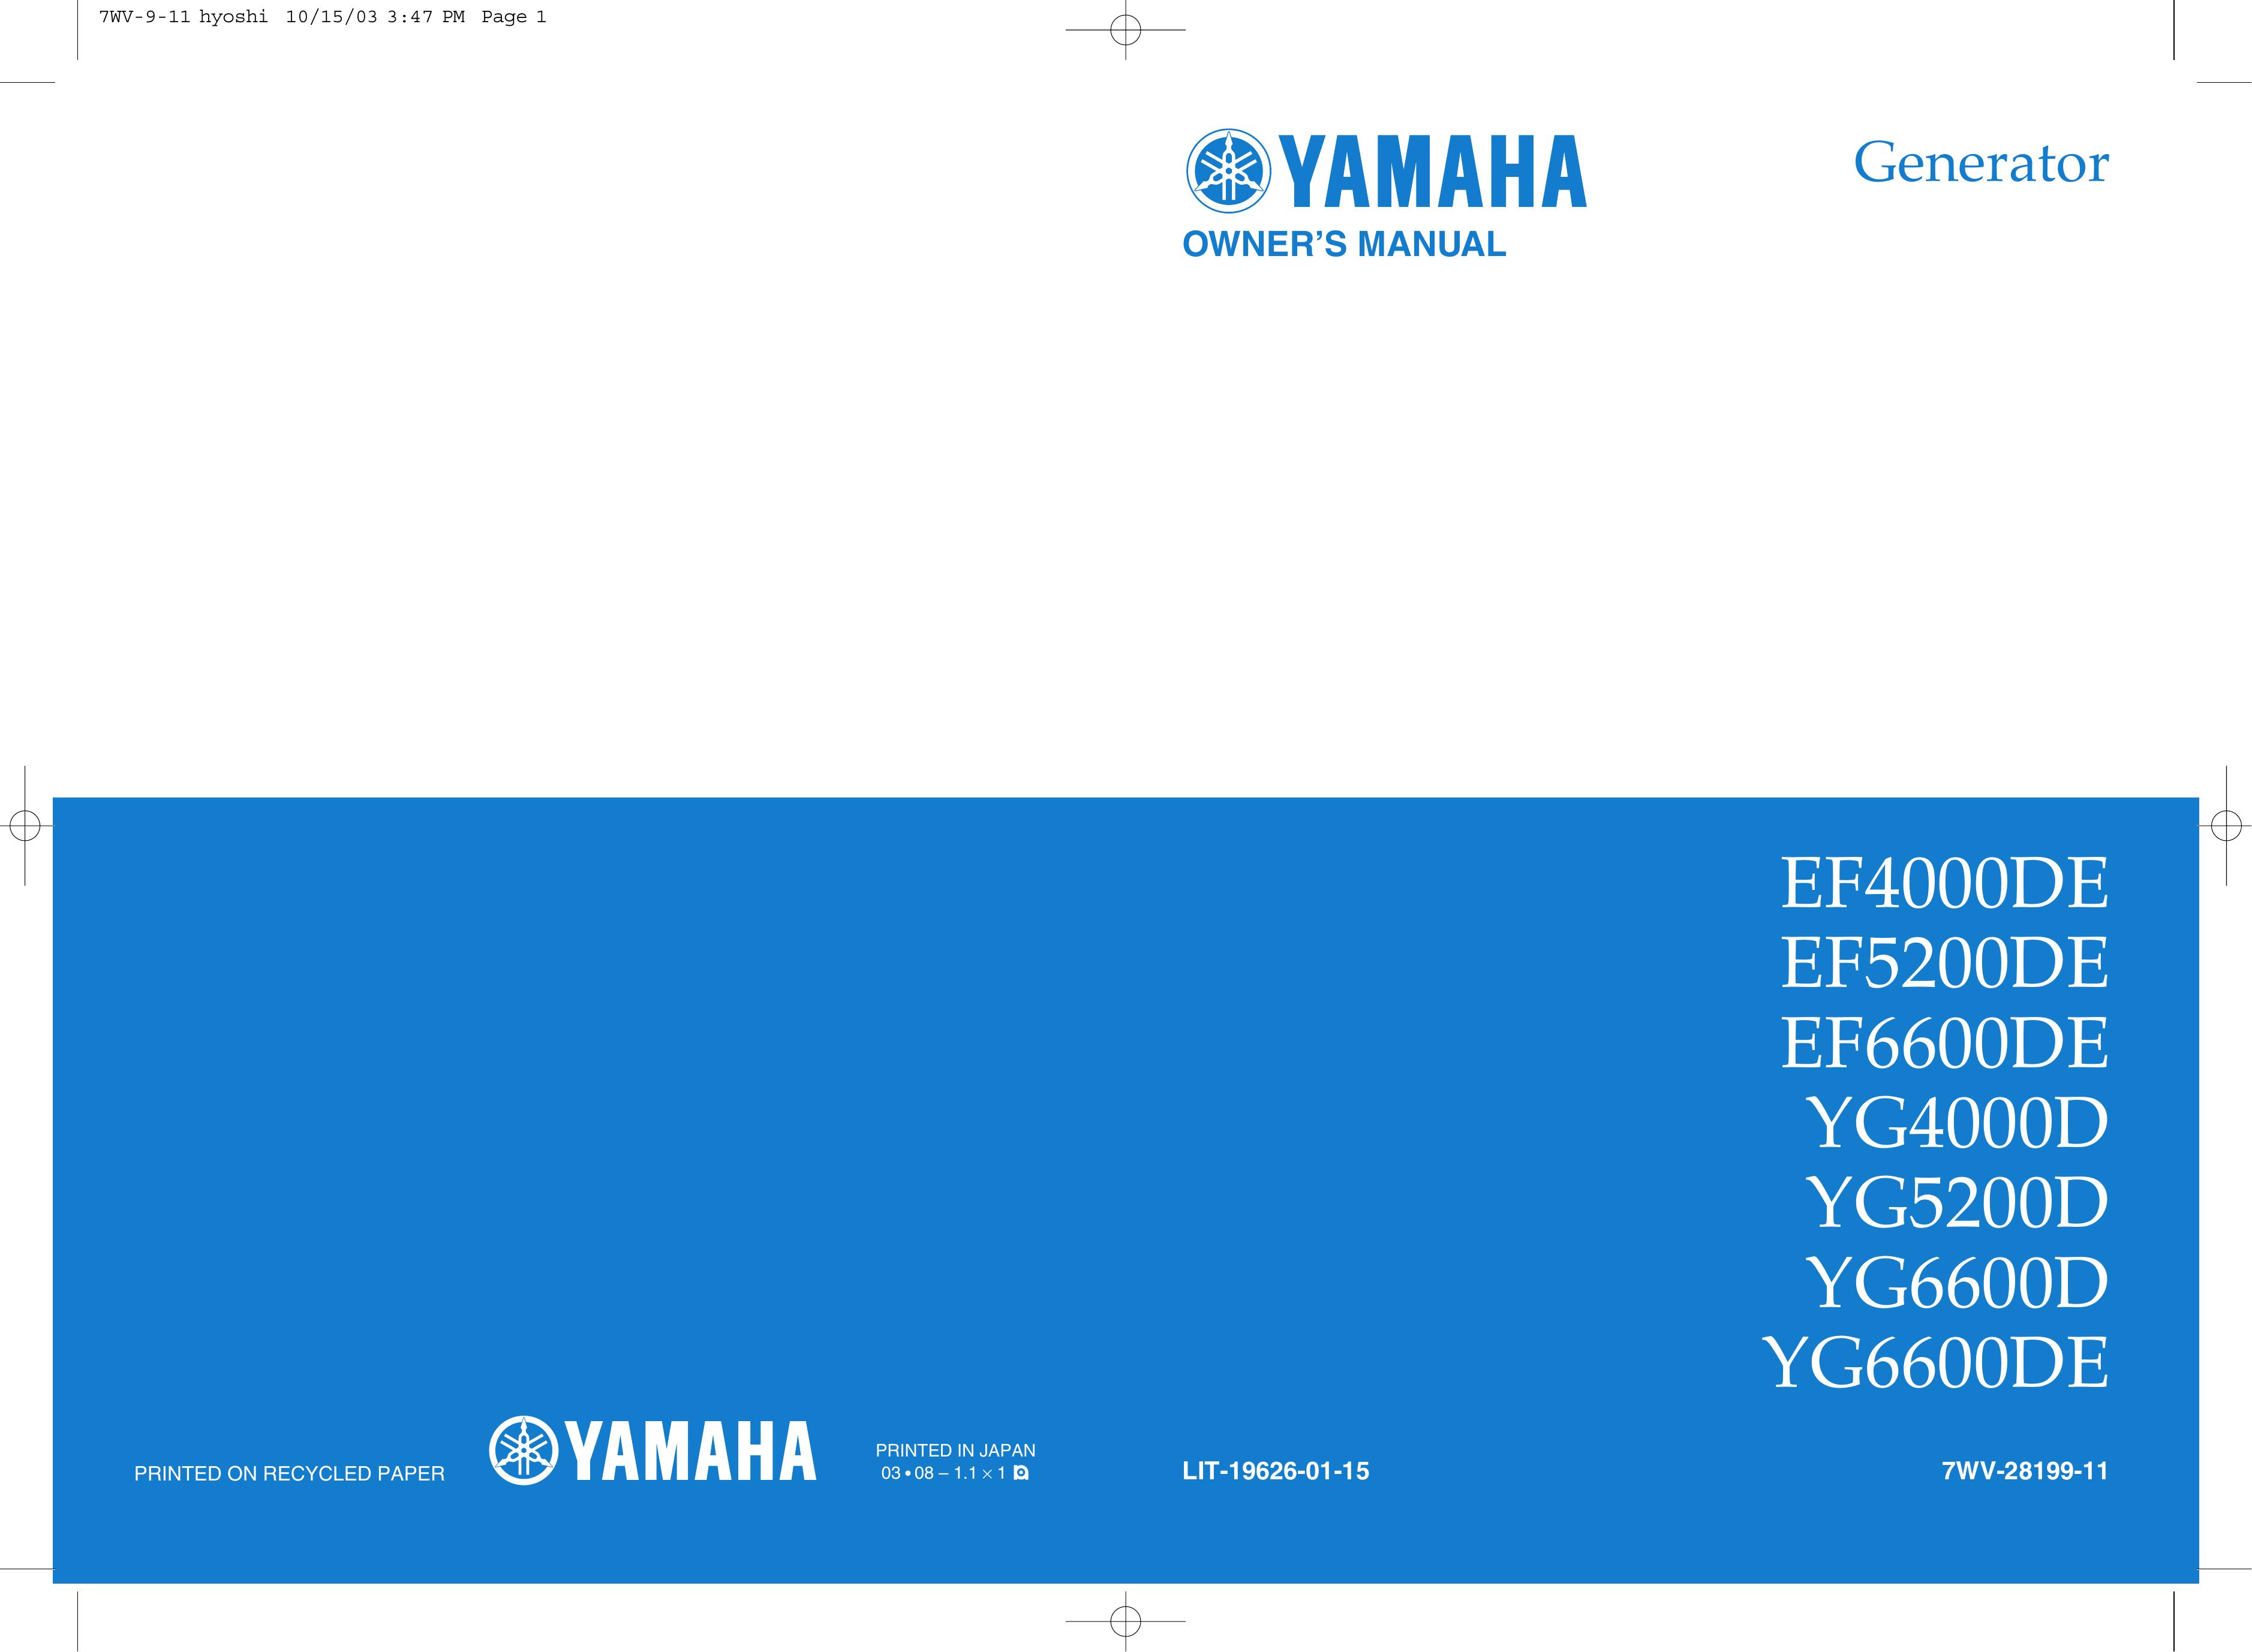 Yamaha YG5200D Portable Generator User Manual